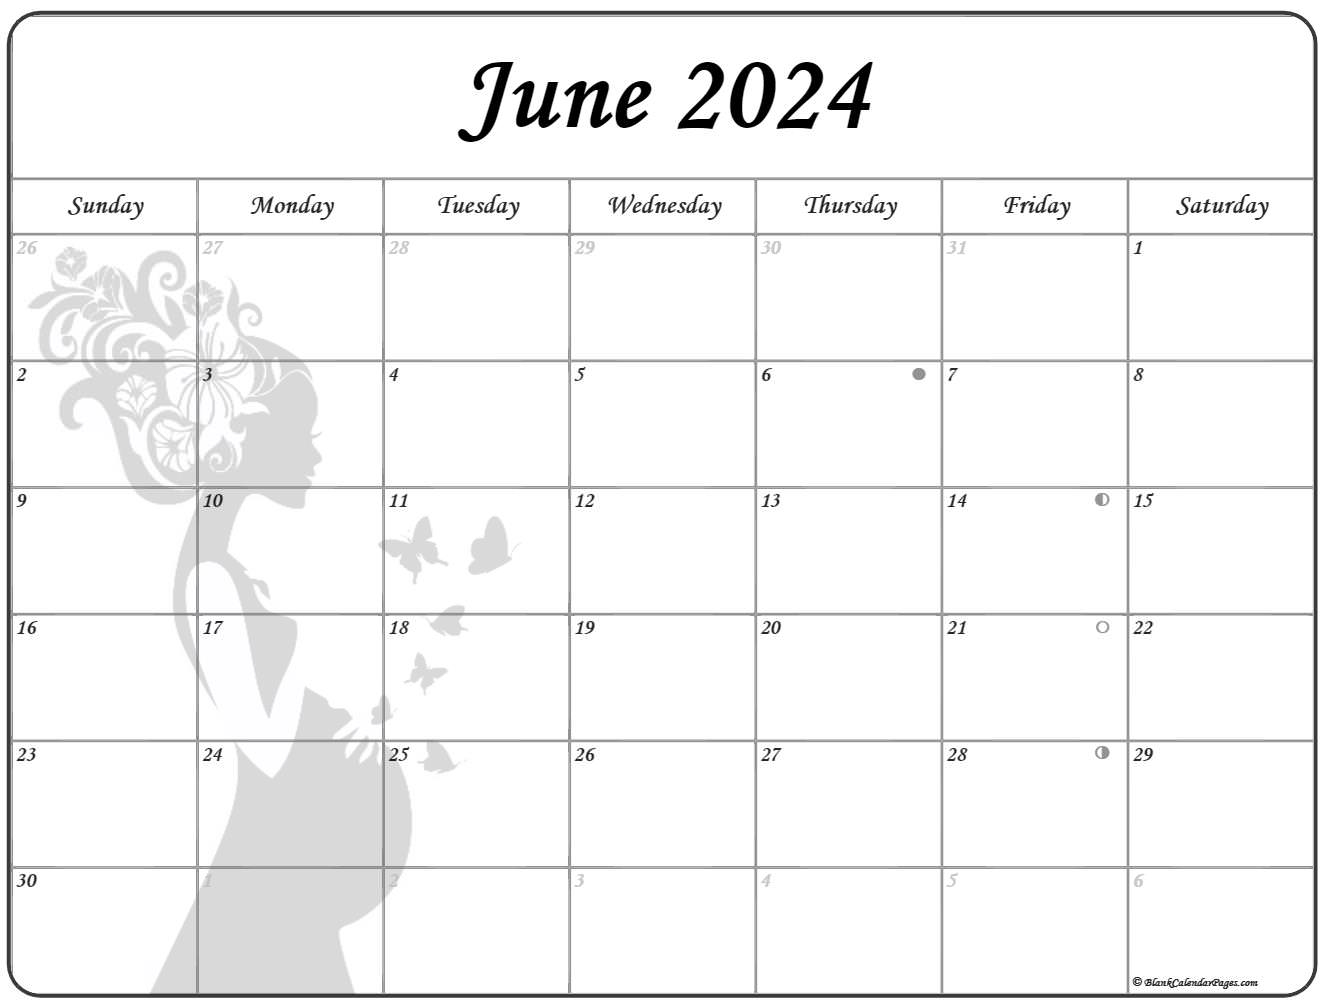 Blogilates June 2024 Calendar Calendar 2024